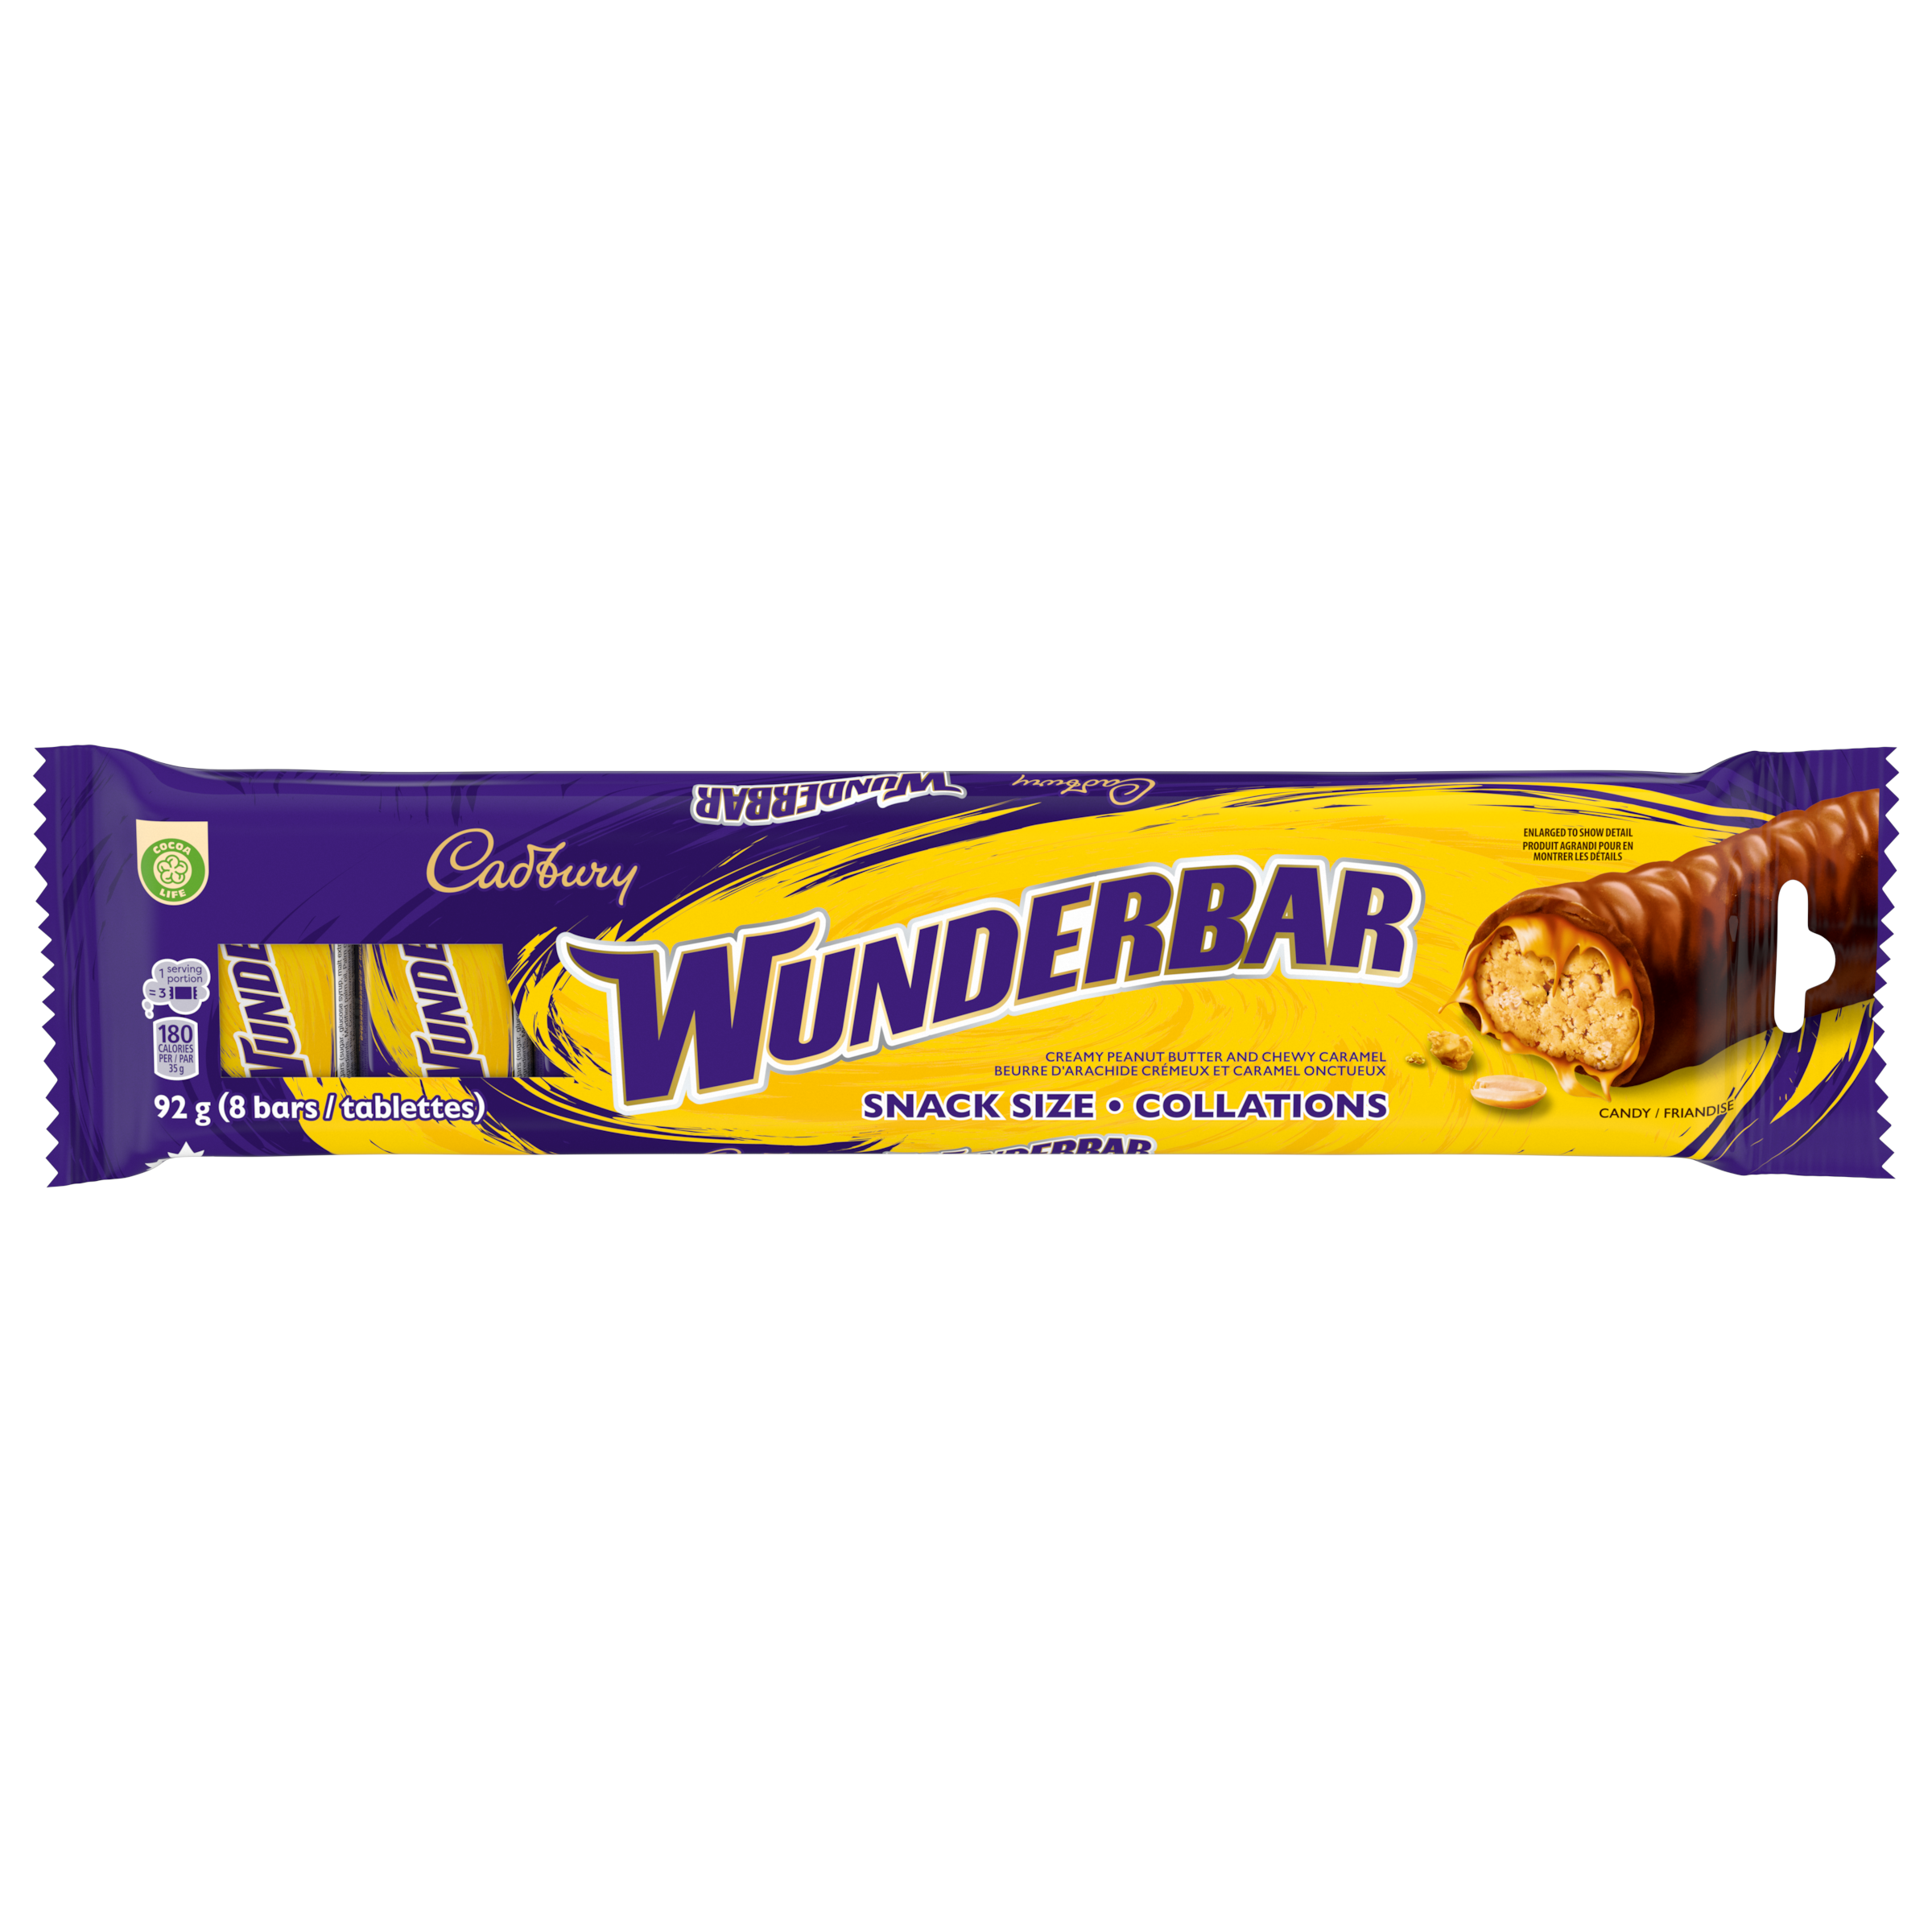 CADBURY WUNDERBAR Snack Size 8ct, 92 g